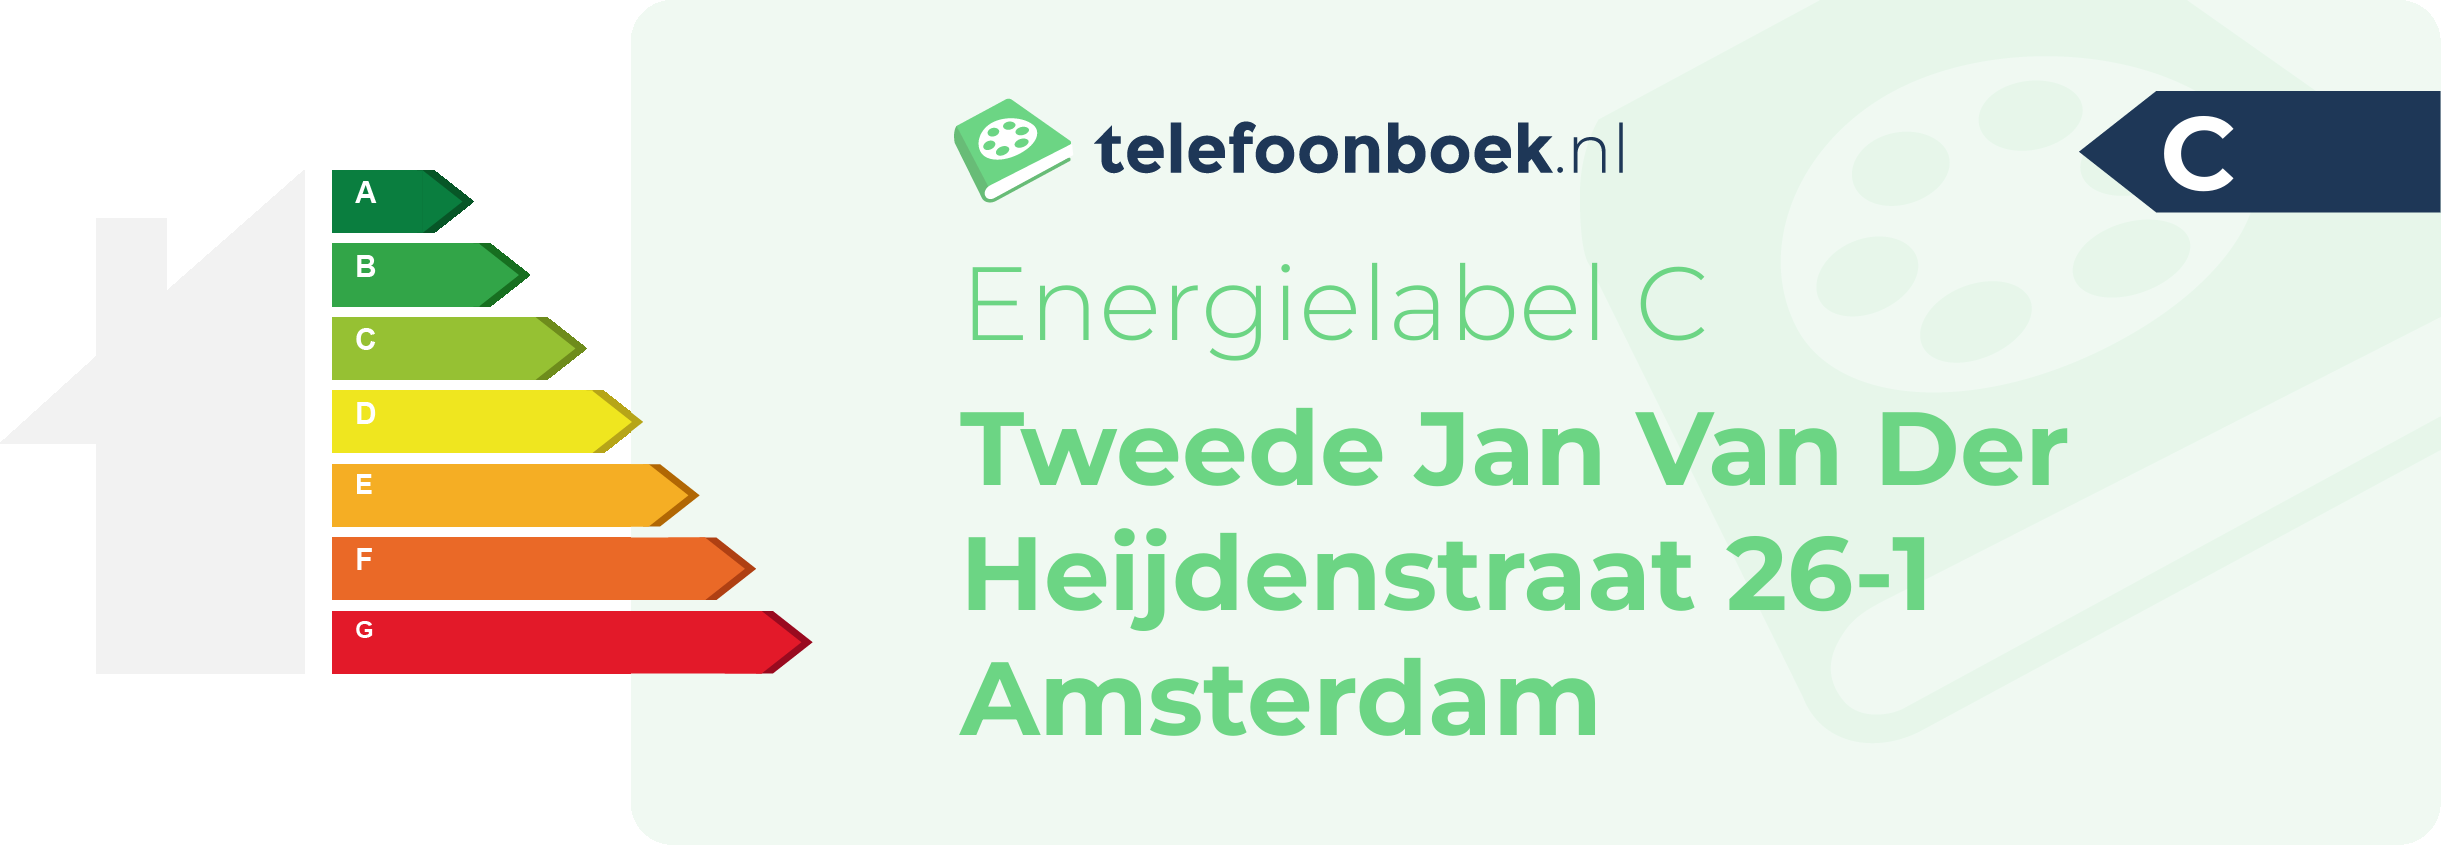 Energielabel Tweede Jan Van Der Heijdenstraat 26-1 Amsterdam